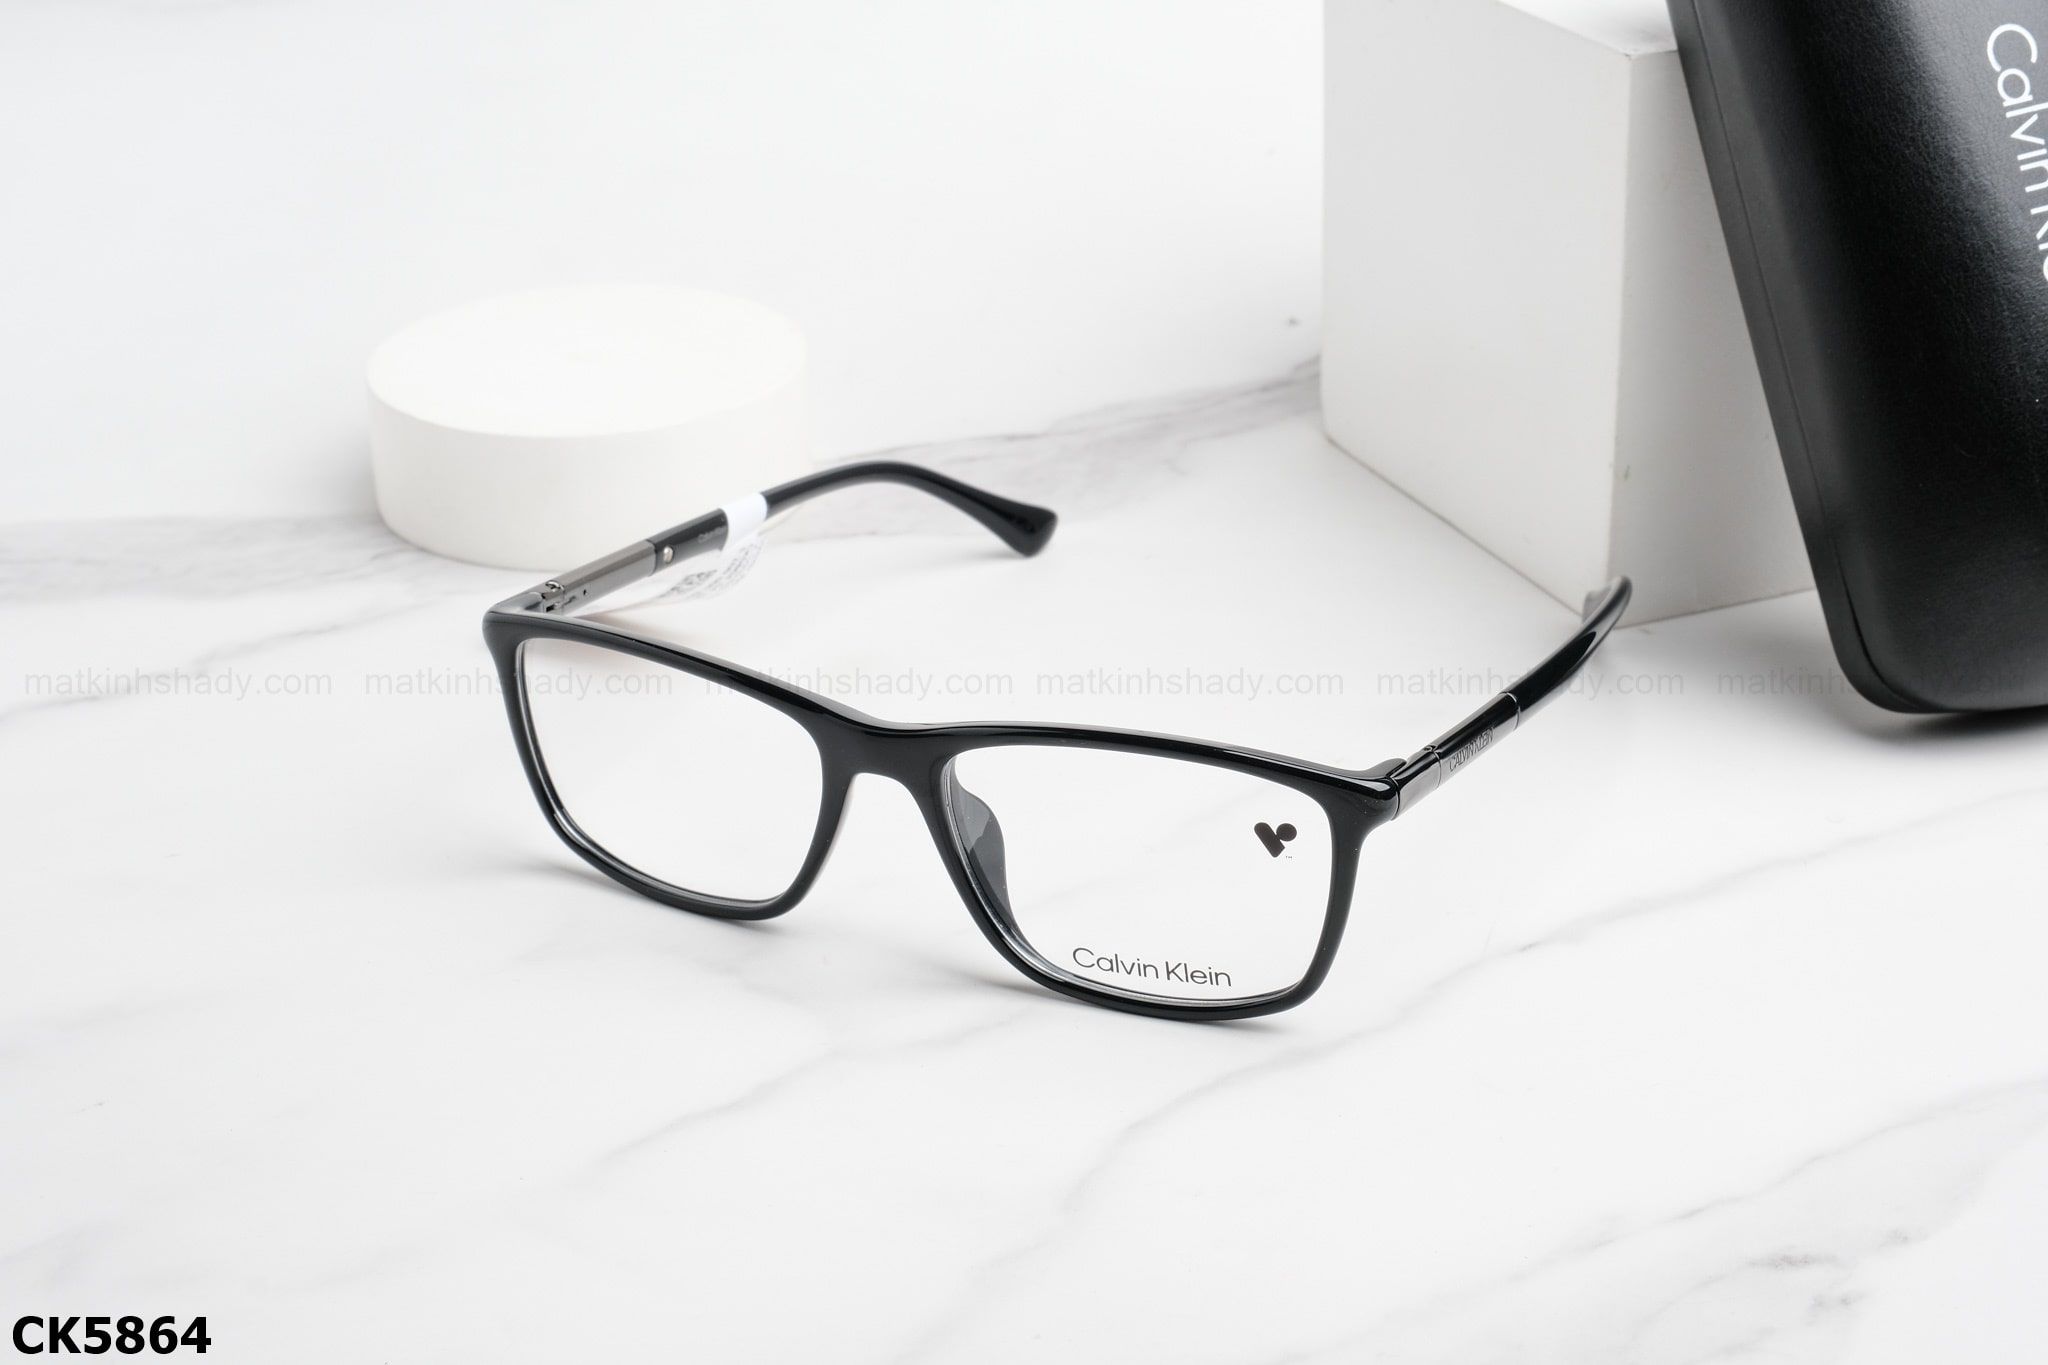  Calvin Klein Eyewear - Glasses - CK5864 